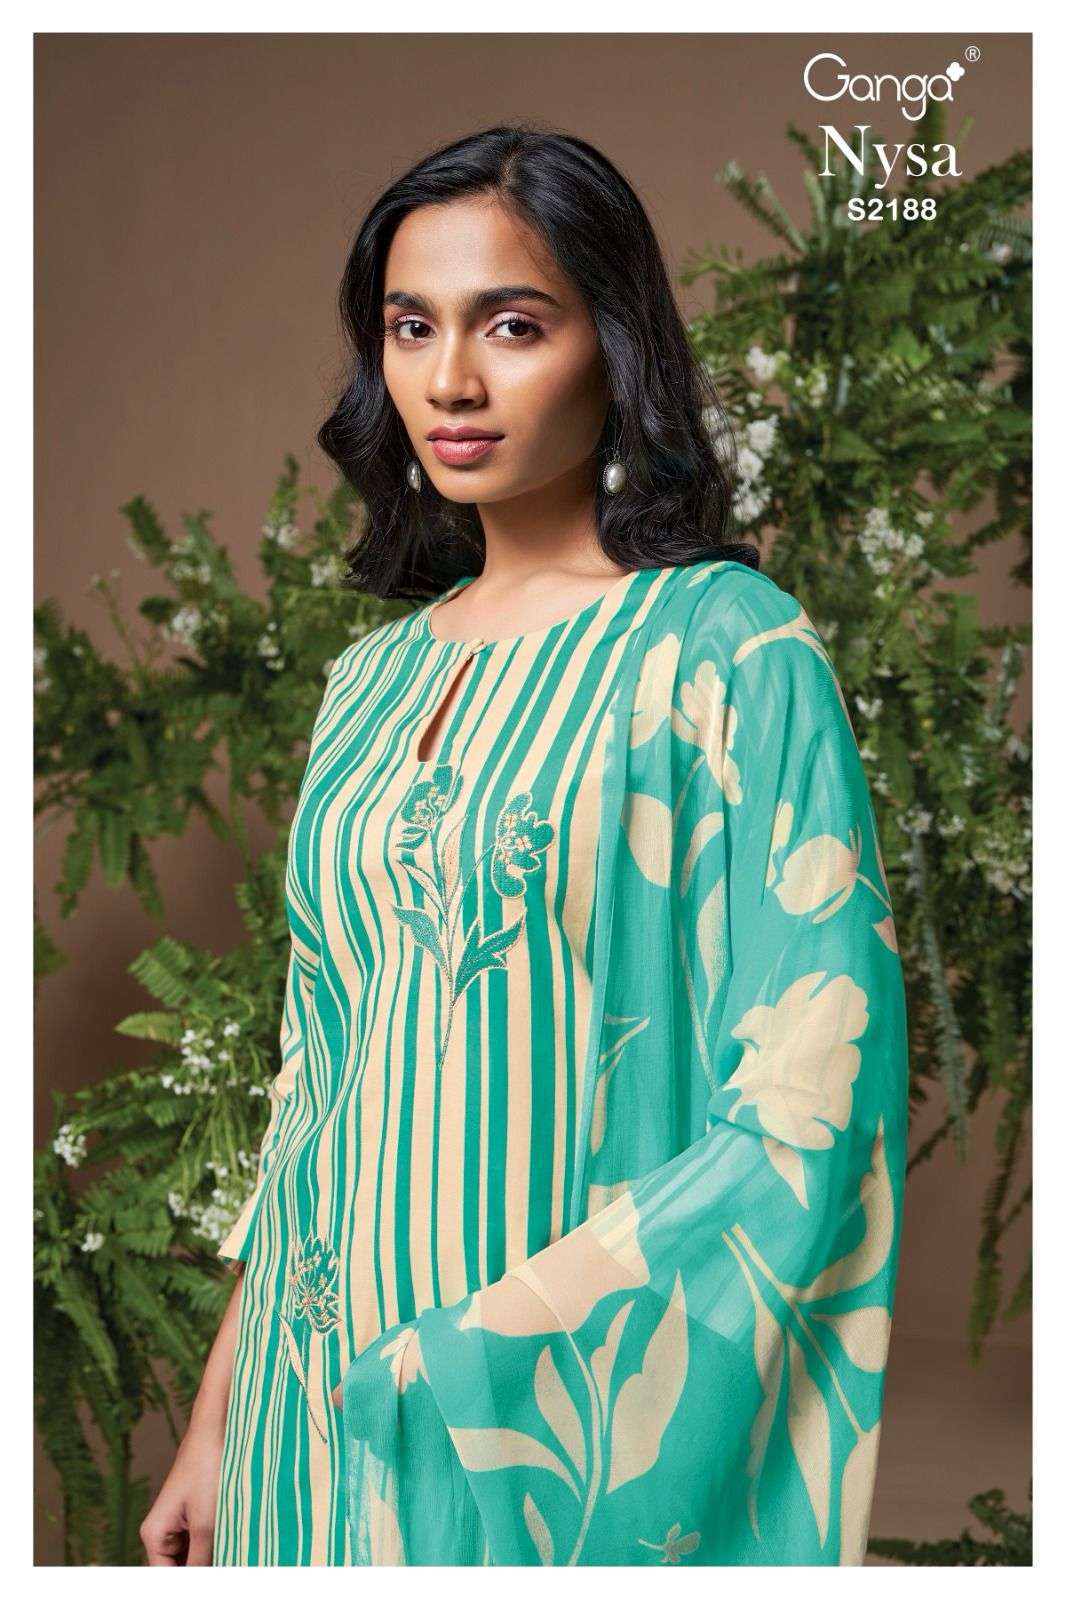 Ganga Nysa 2188 Branded Premium Cotton Dress Exporters